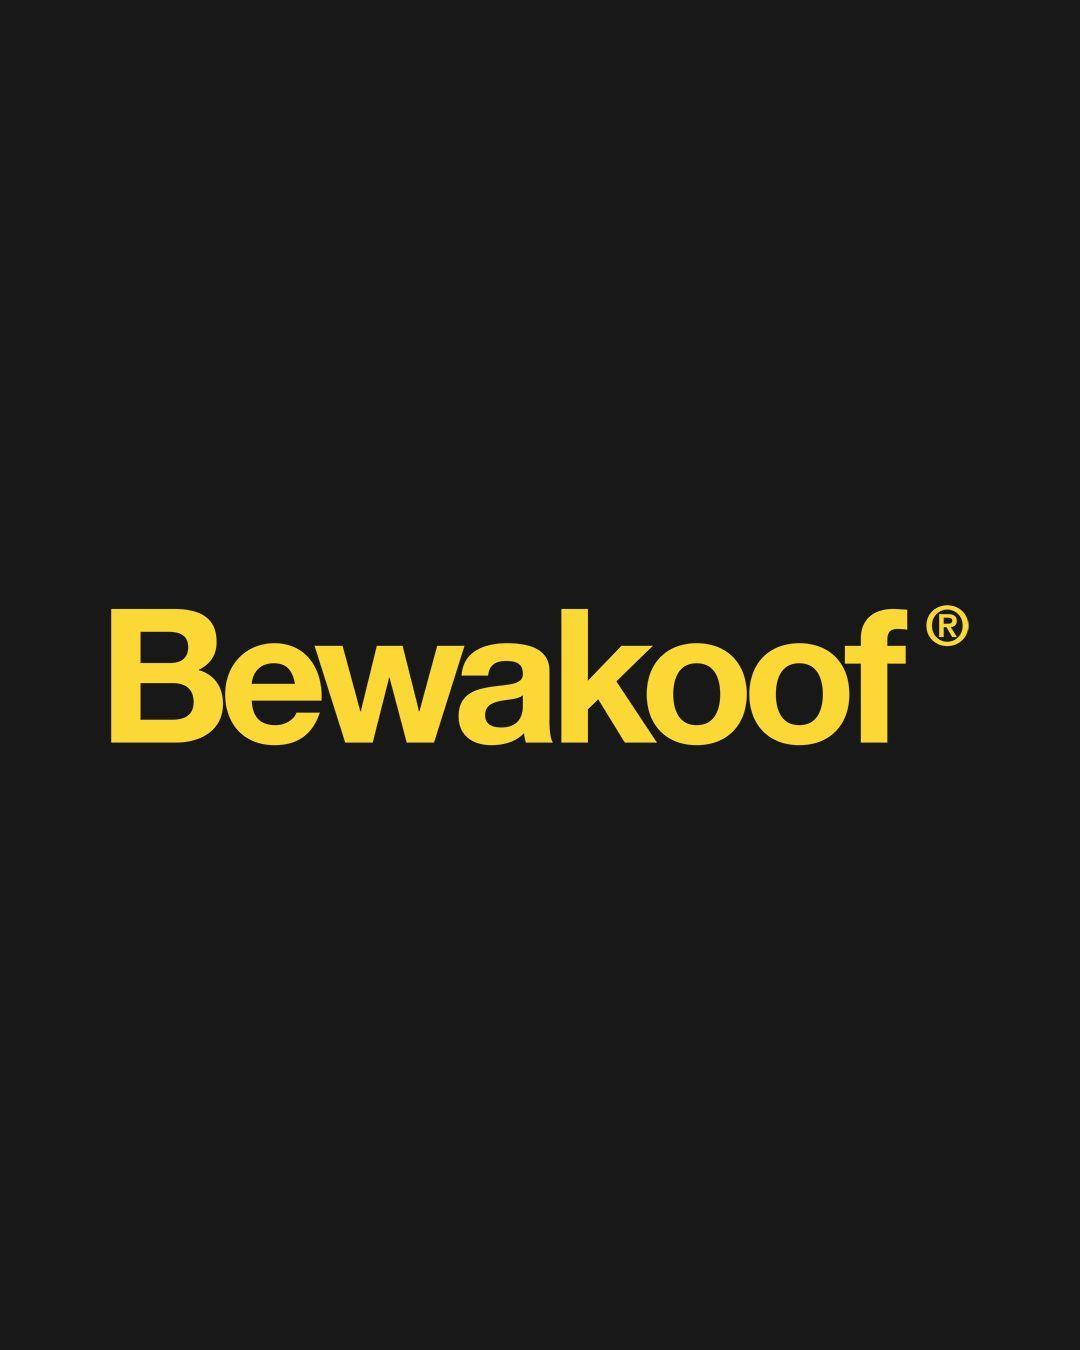 Yellow Heart Company Logo - Bewakoof.com | Bewakoof Logo | Company logo, Logos, Unique names